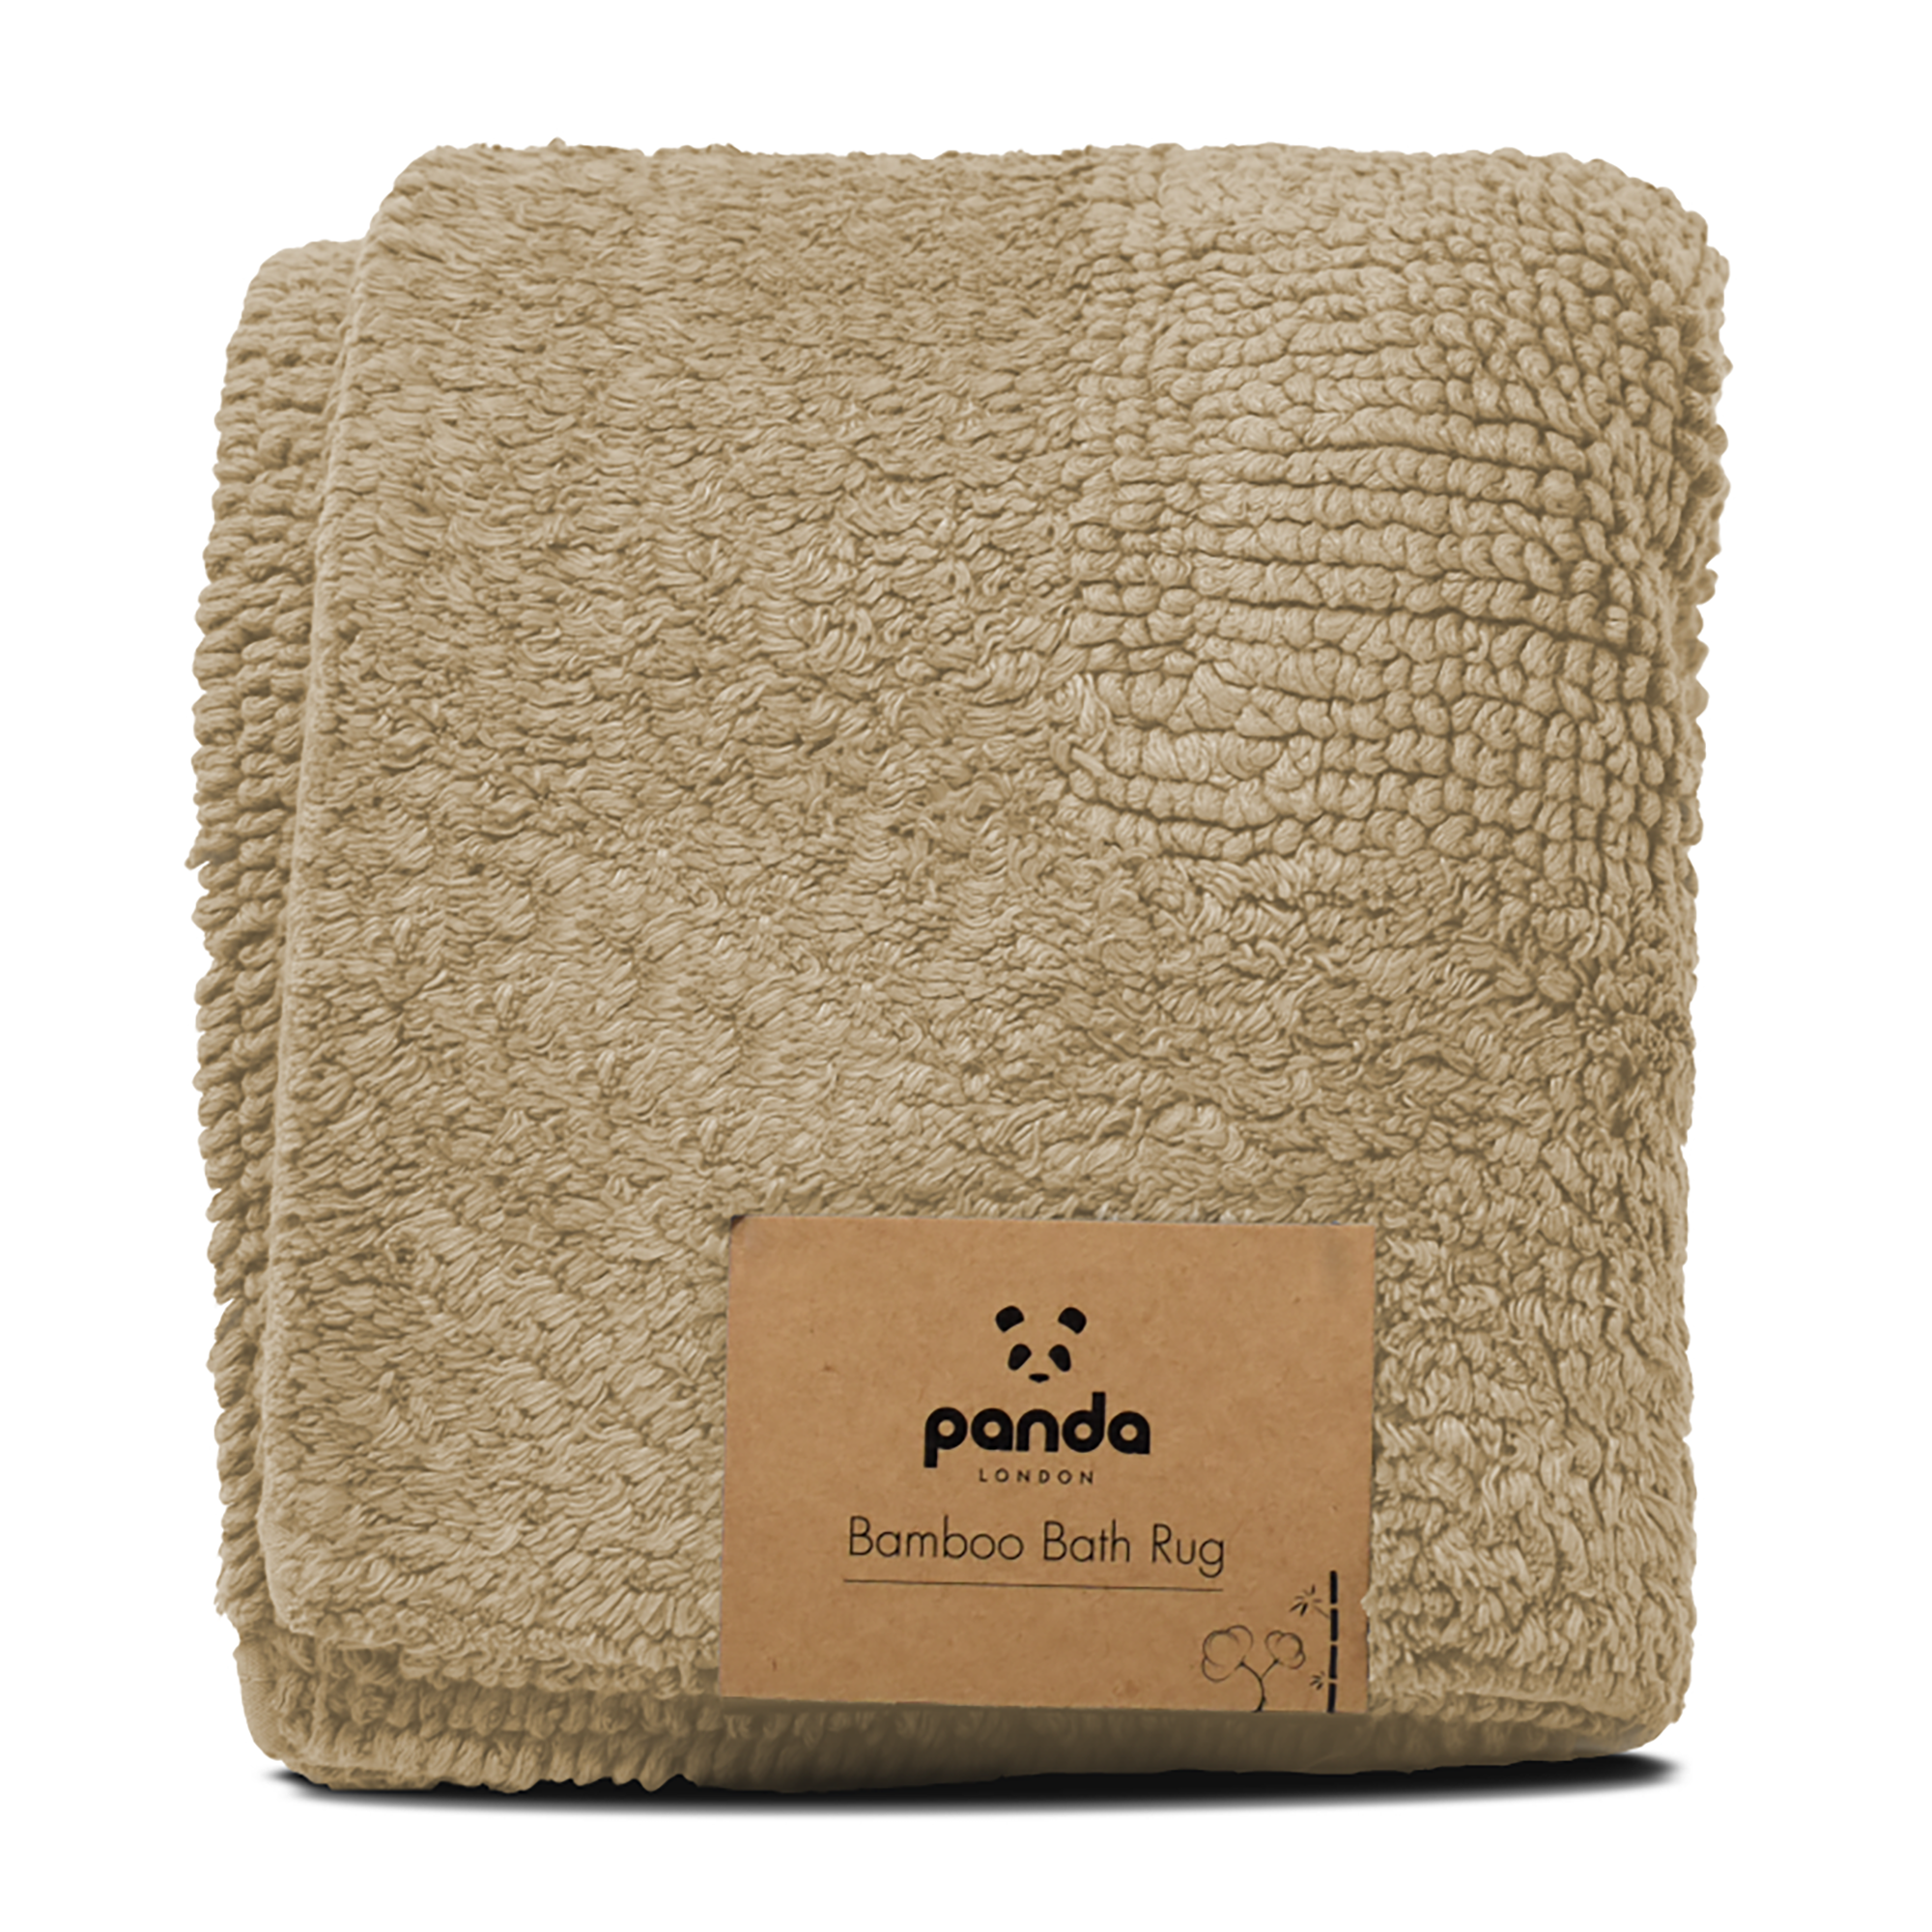 Panda Bamboo Bath Rug